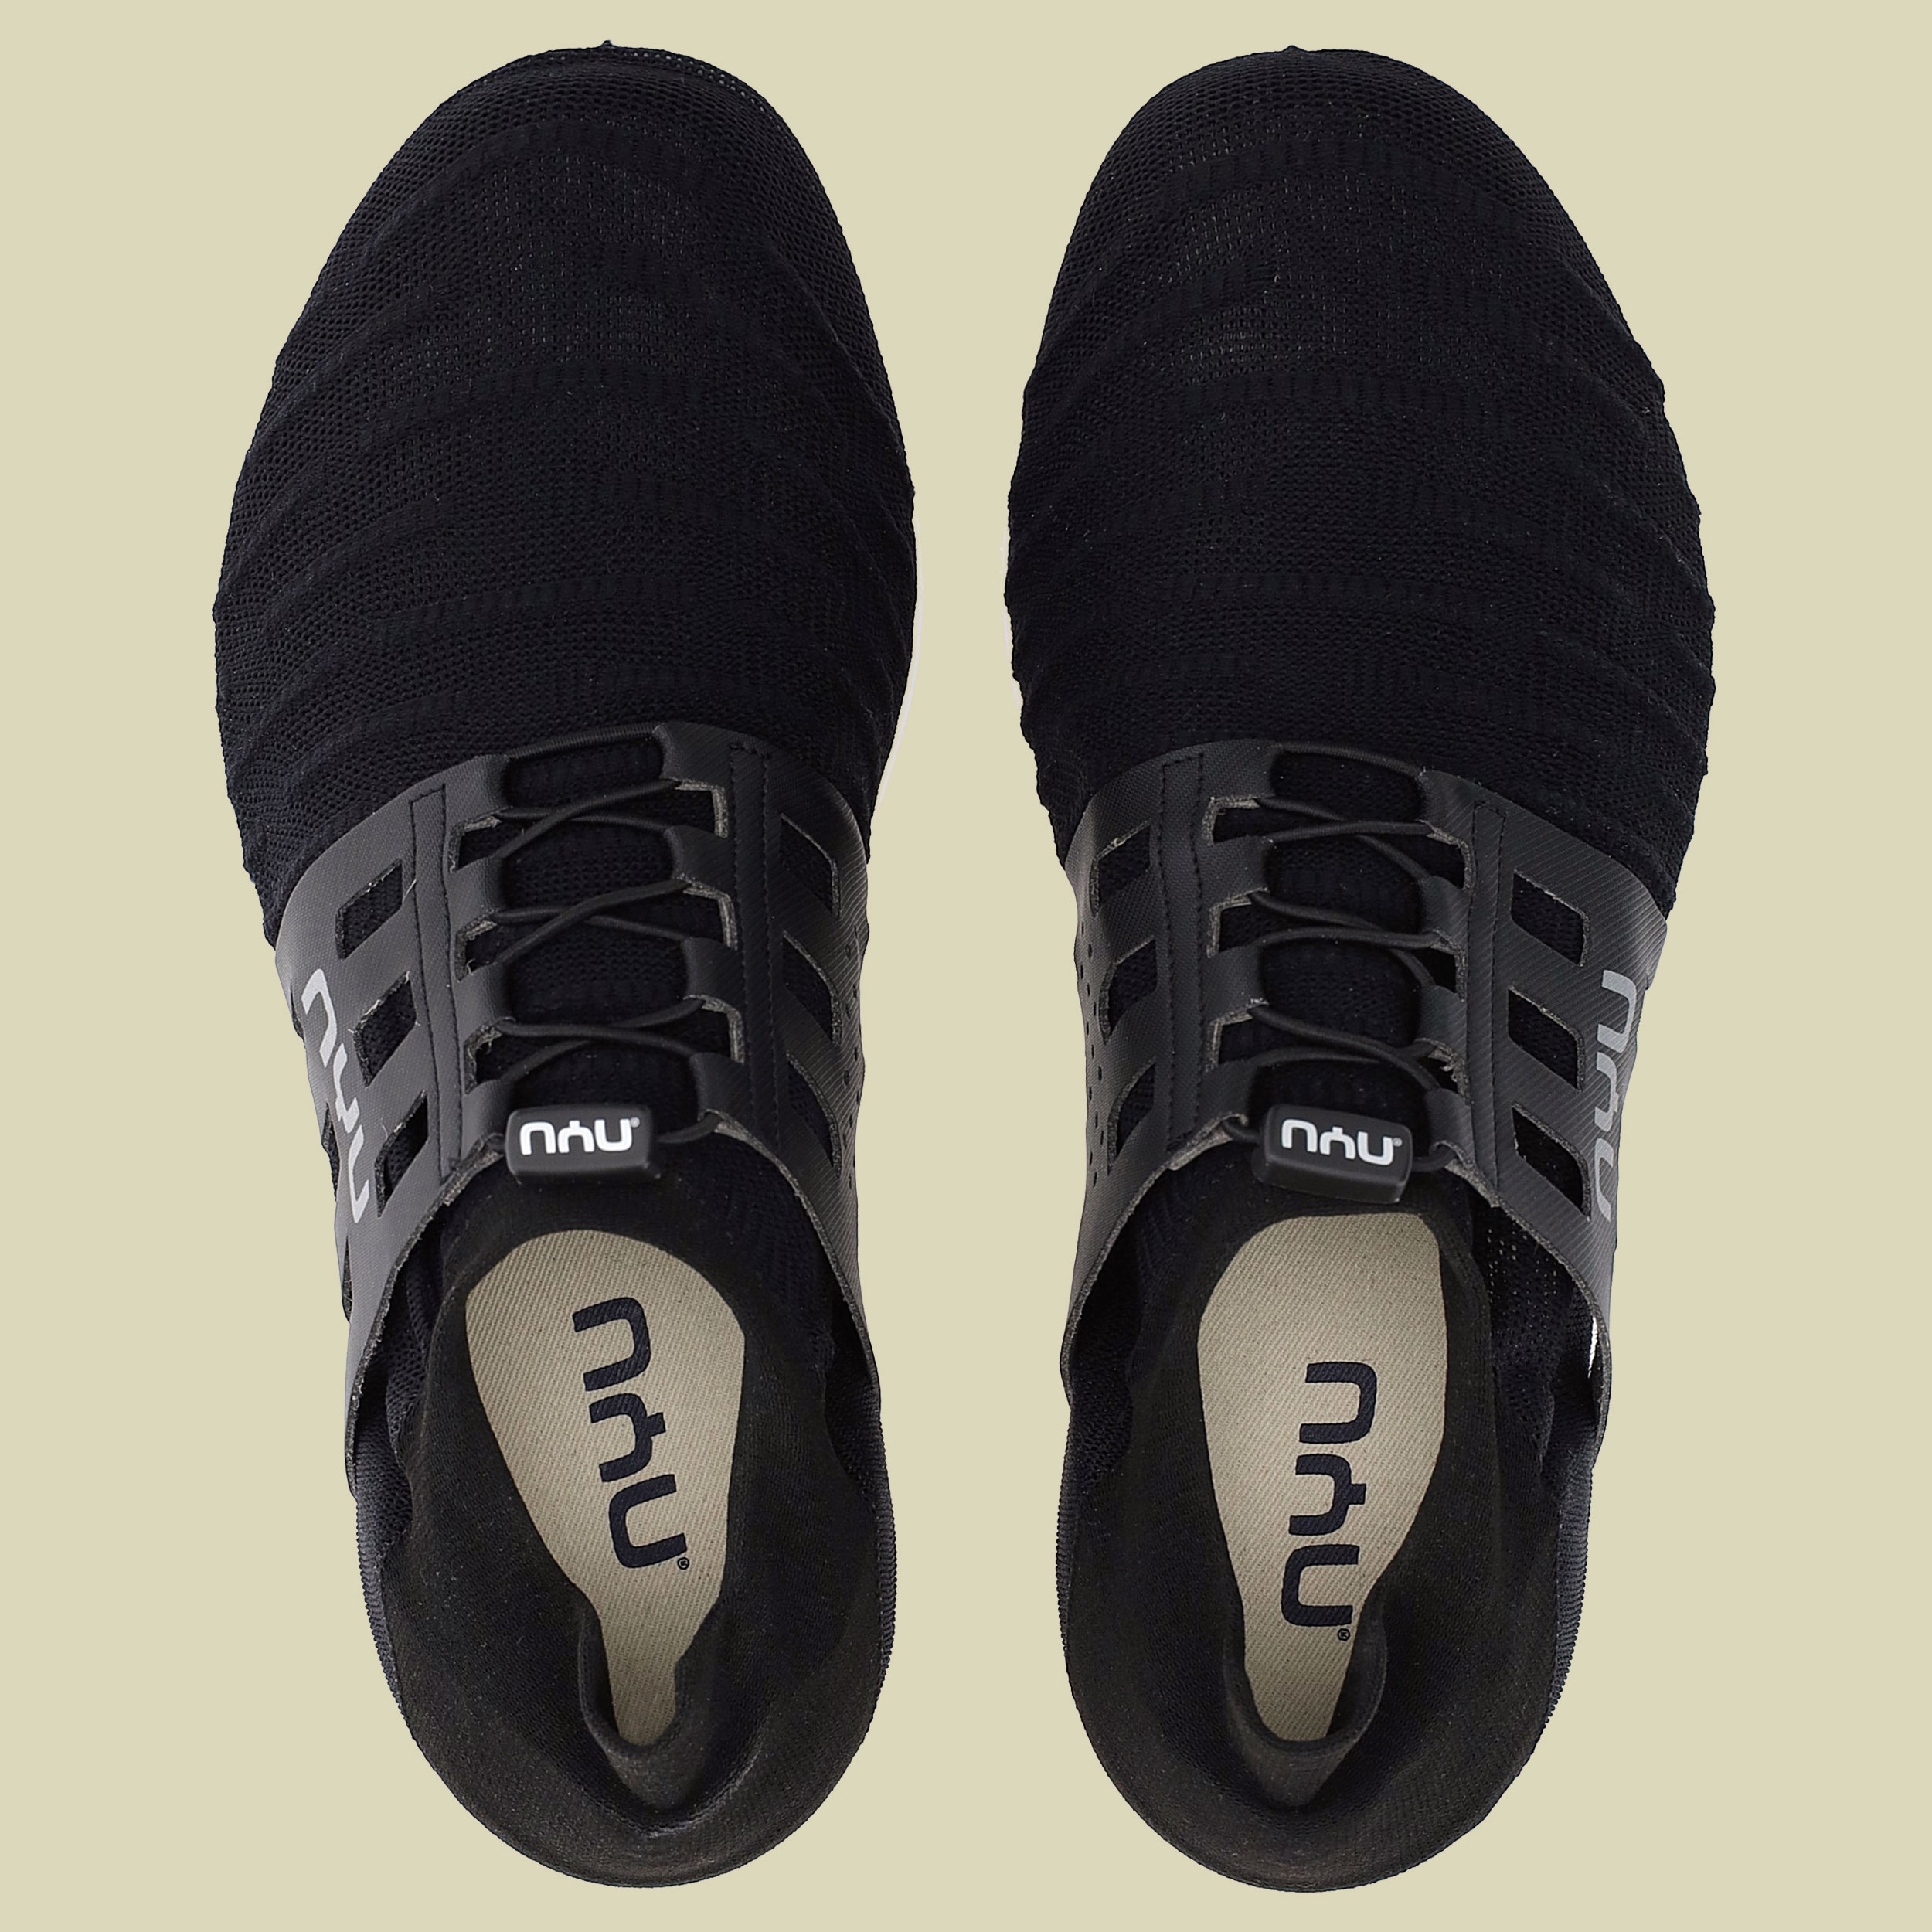 3D Ribs Tune Shoes Women Größe 40 Farbe black/charcoal